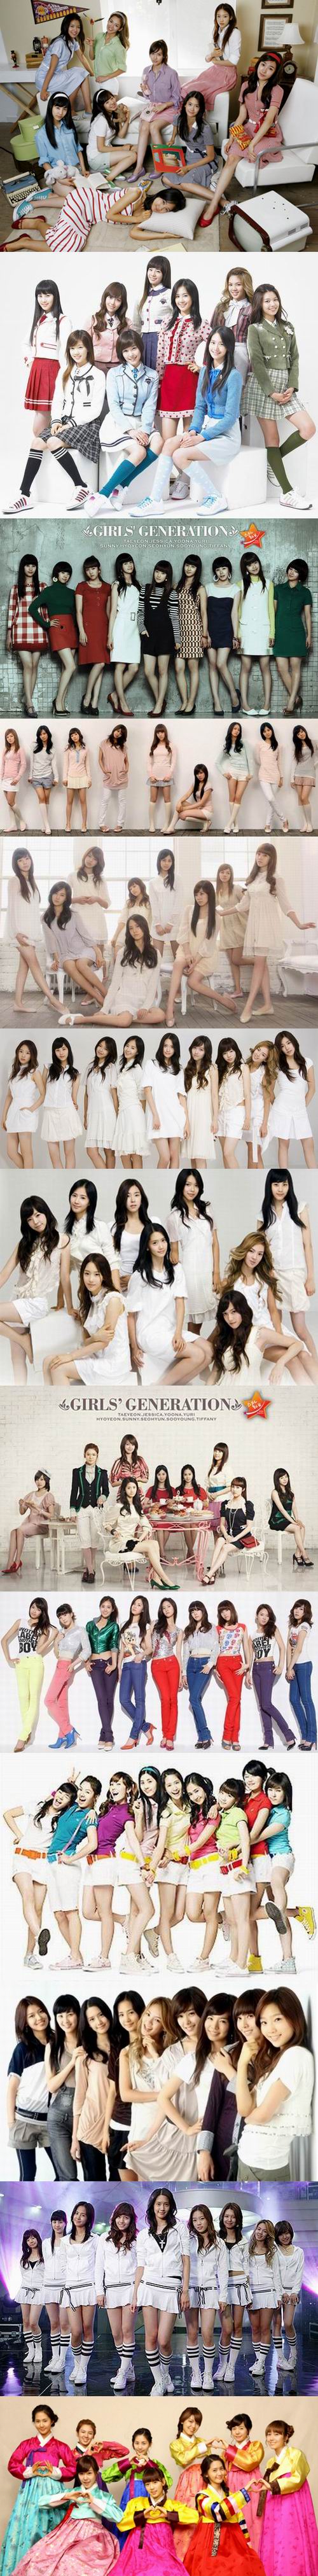 girl generation